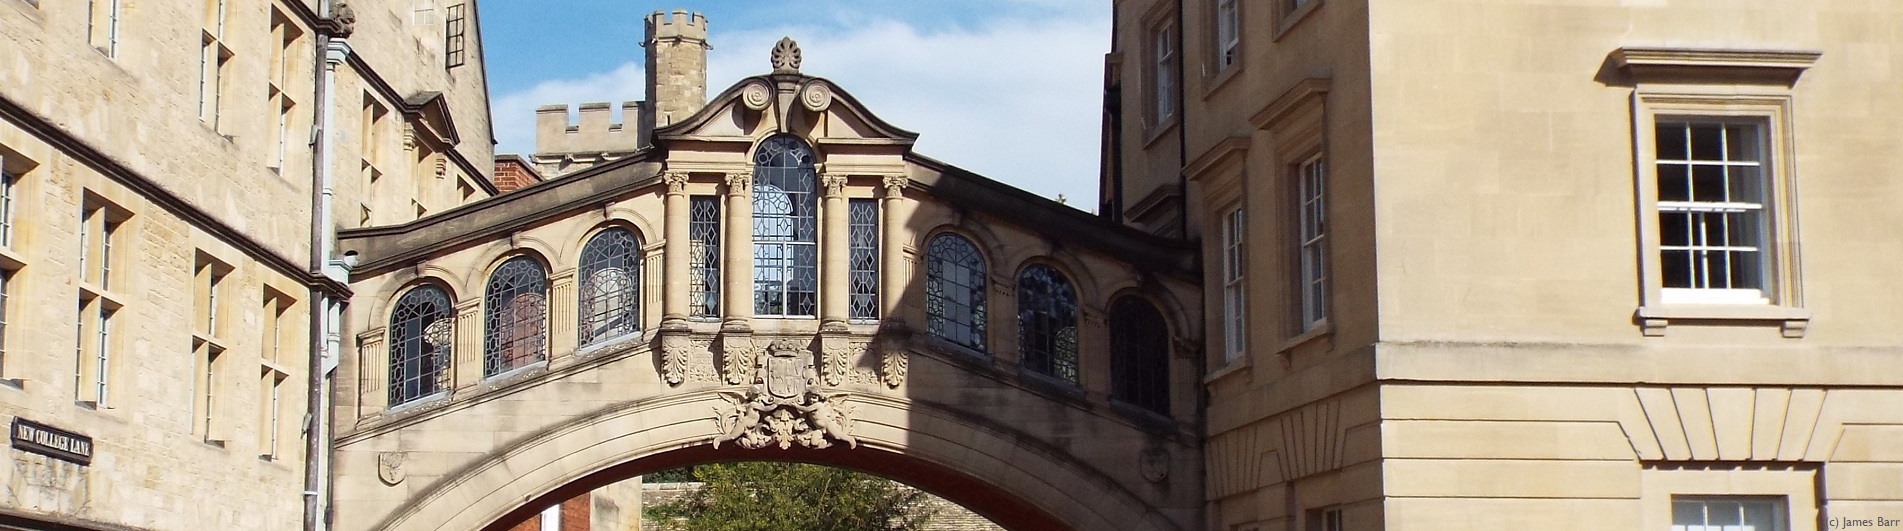 Image of bridge at Hertford College, Oxford